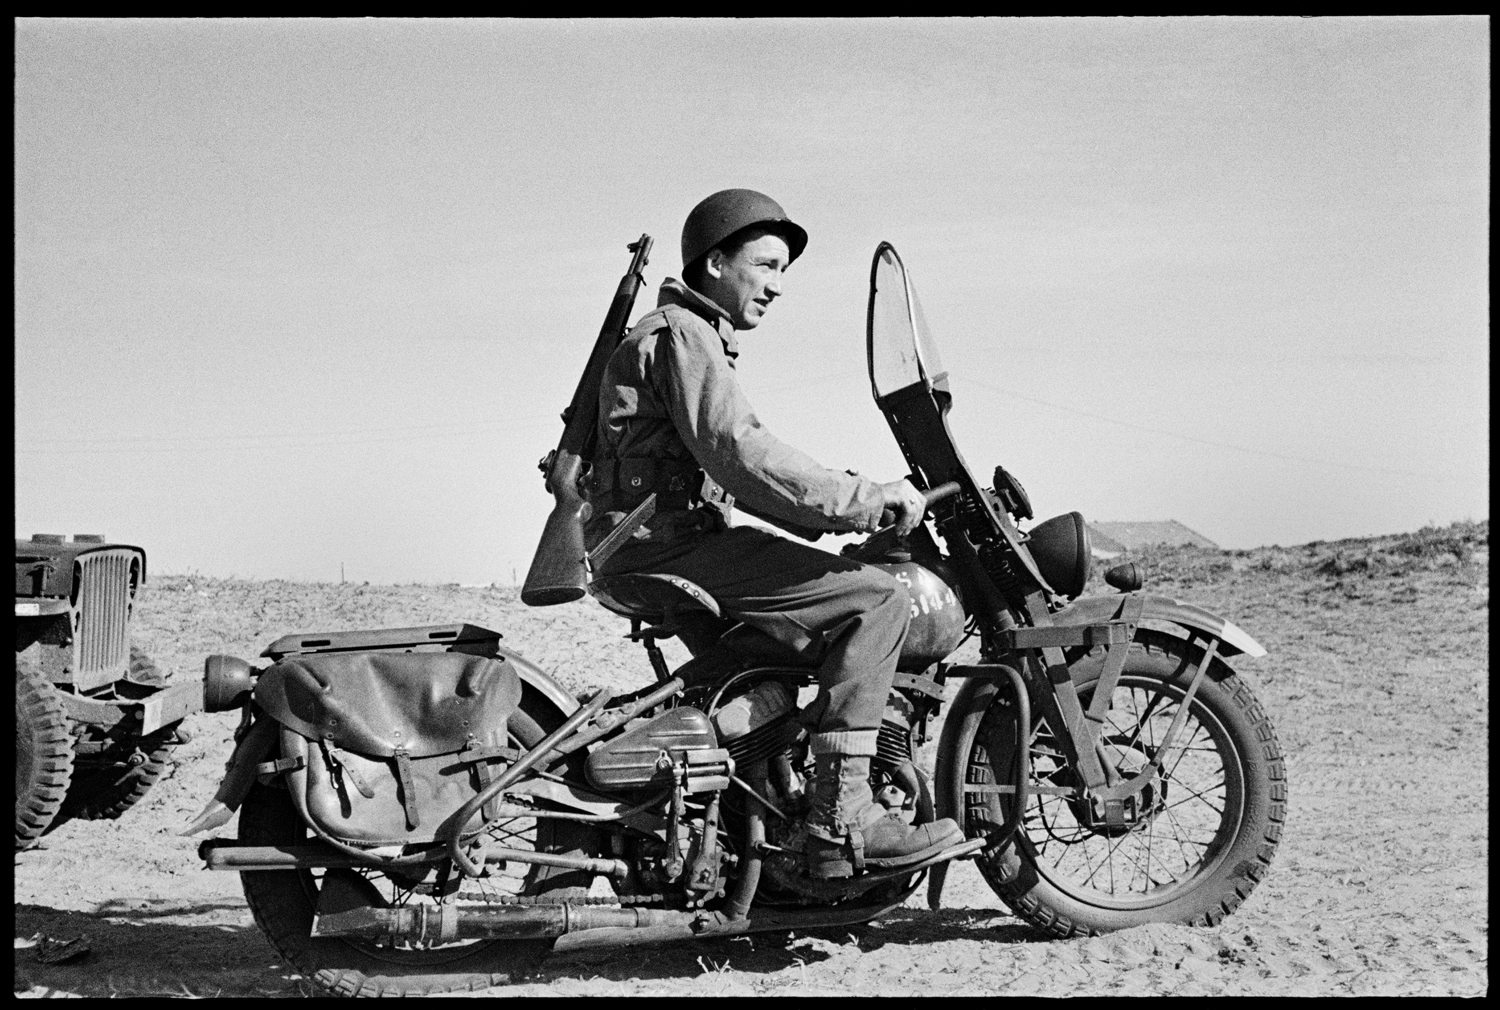 U.S. Army Ranger on motorcycle, Sicily, 1943.